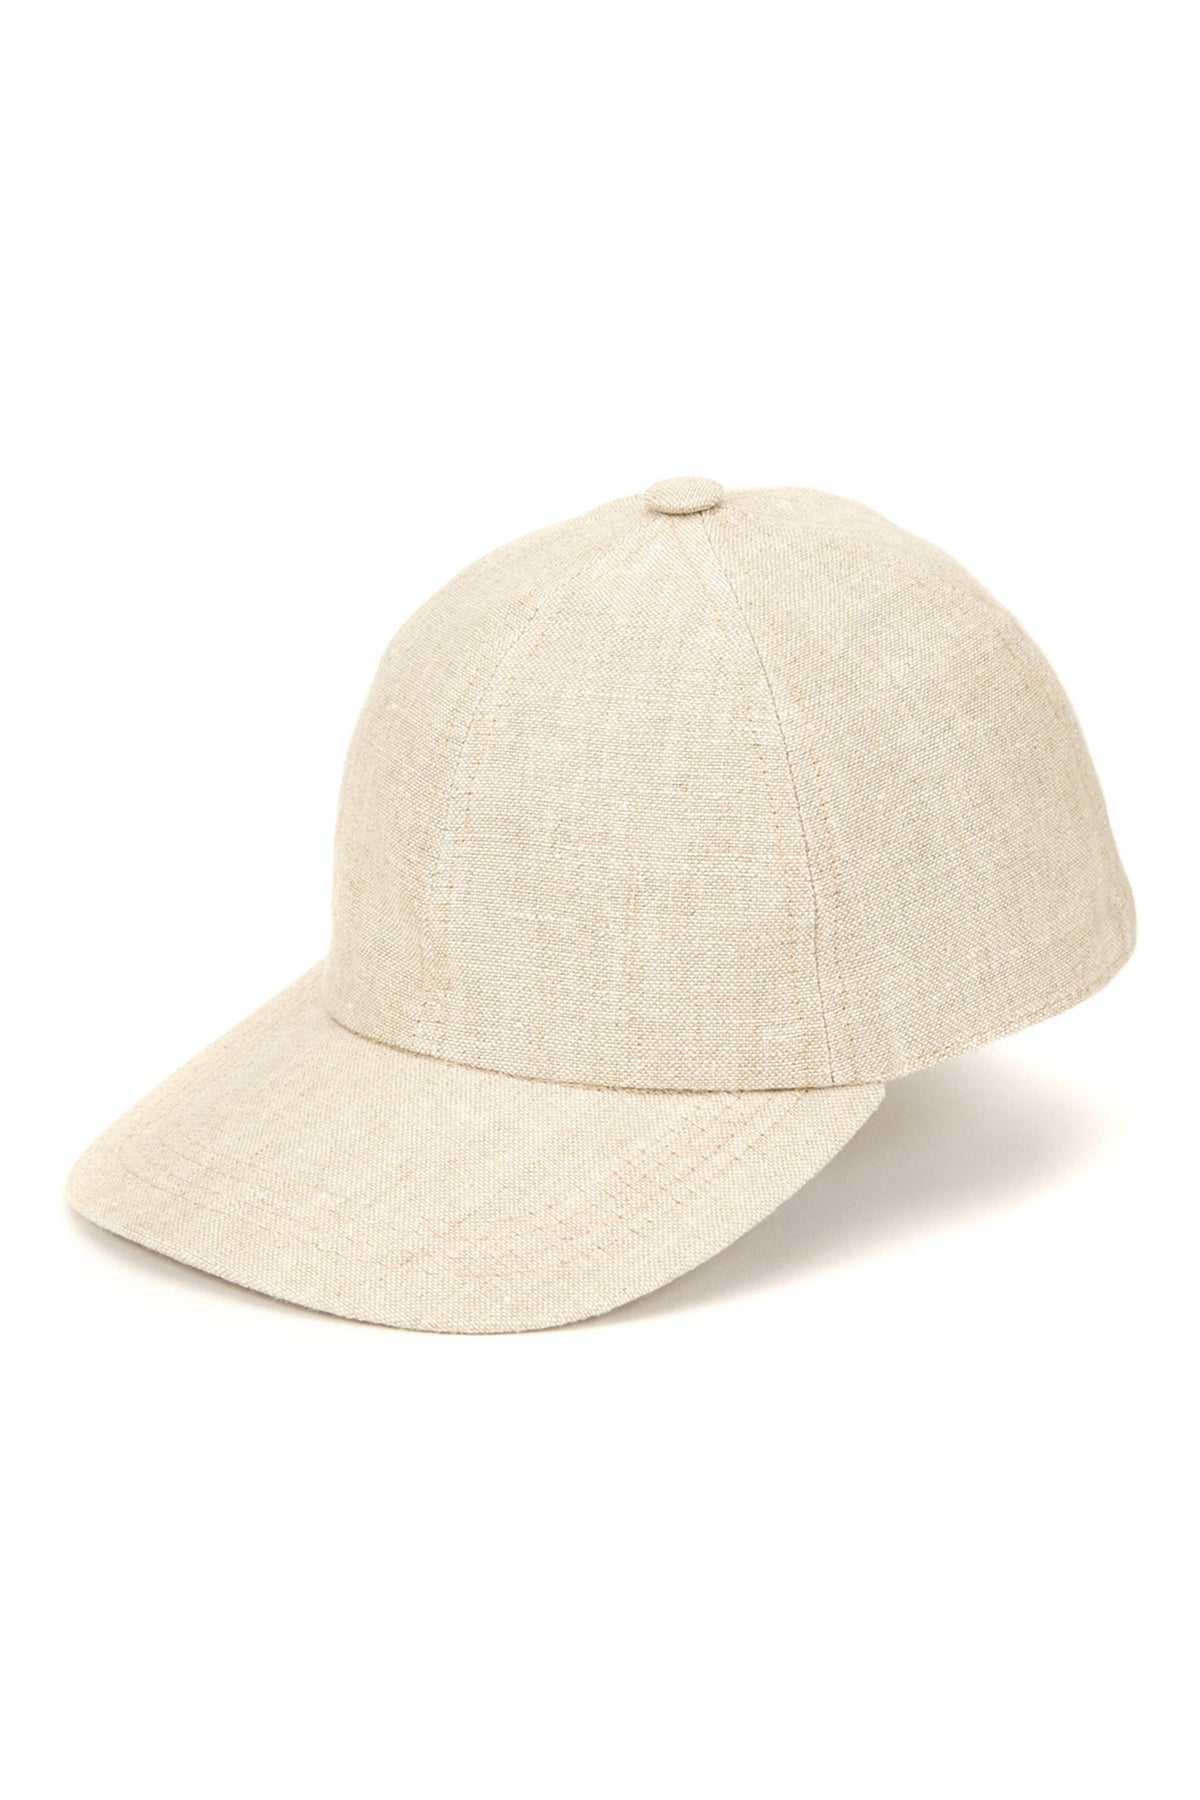 Rimini Baseball Cap - Lock & Co. Hats for Men & Women | Baseball Caps